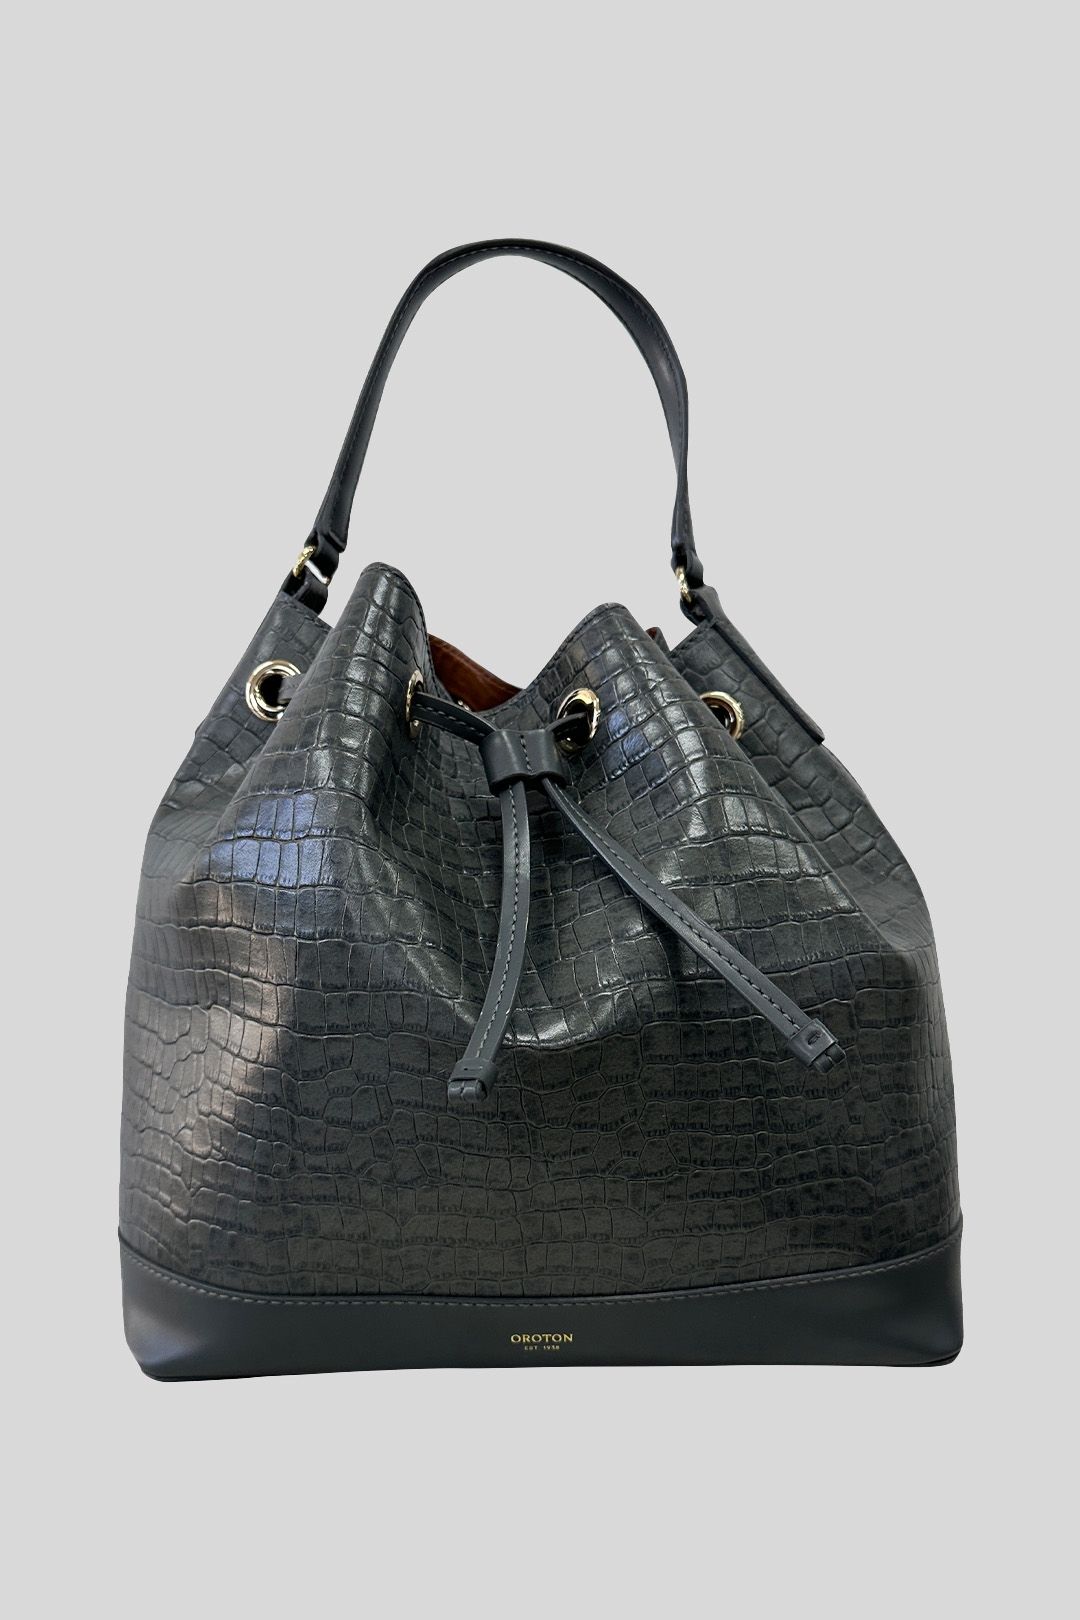 Designer S Shoulder Bag Crossbody Totes Black Bonia Handbag Oroton Bags  Baguette Beach Jean Flip Envelope Bag From Amxh8888, $64.57 | DHgate.Com